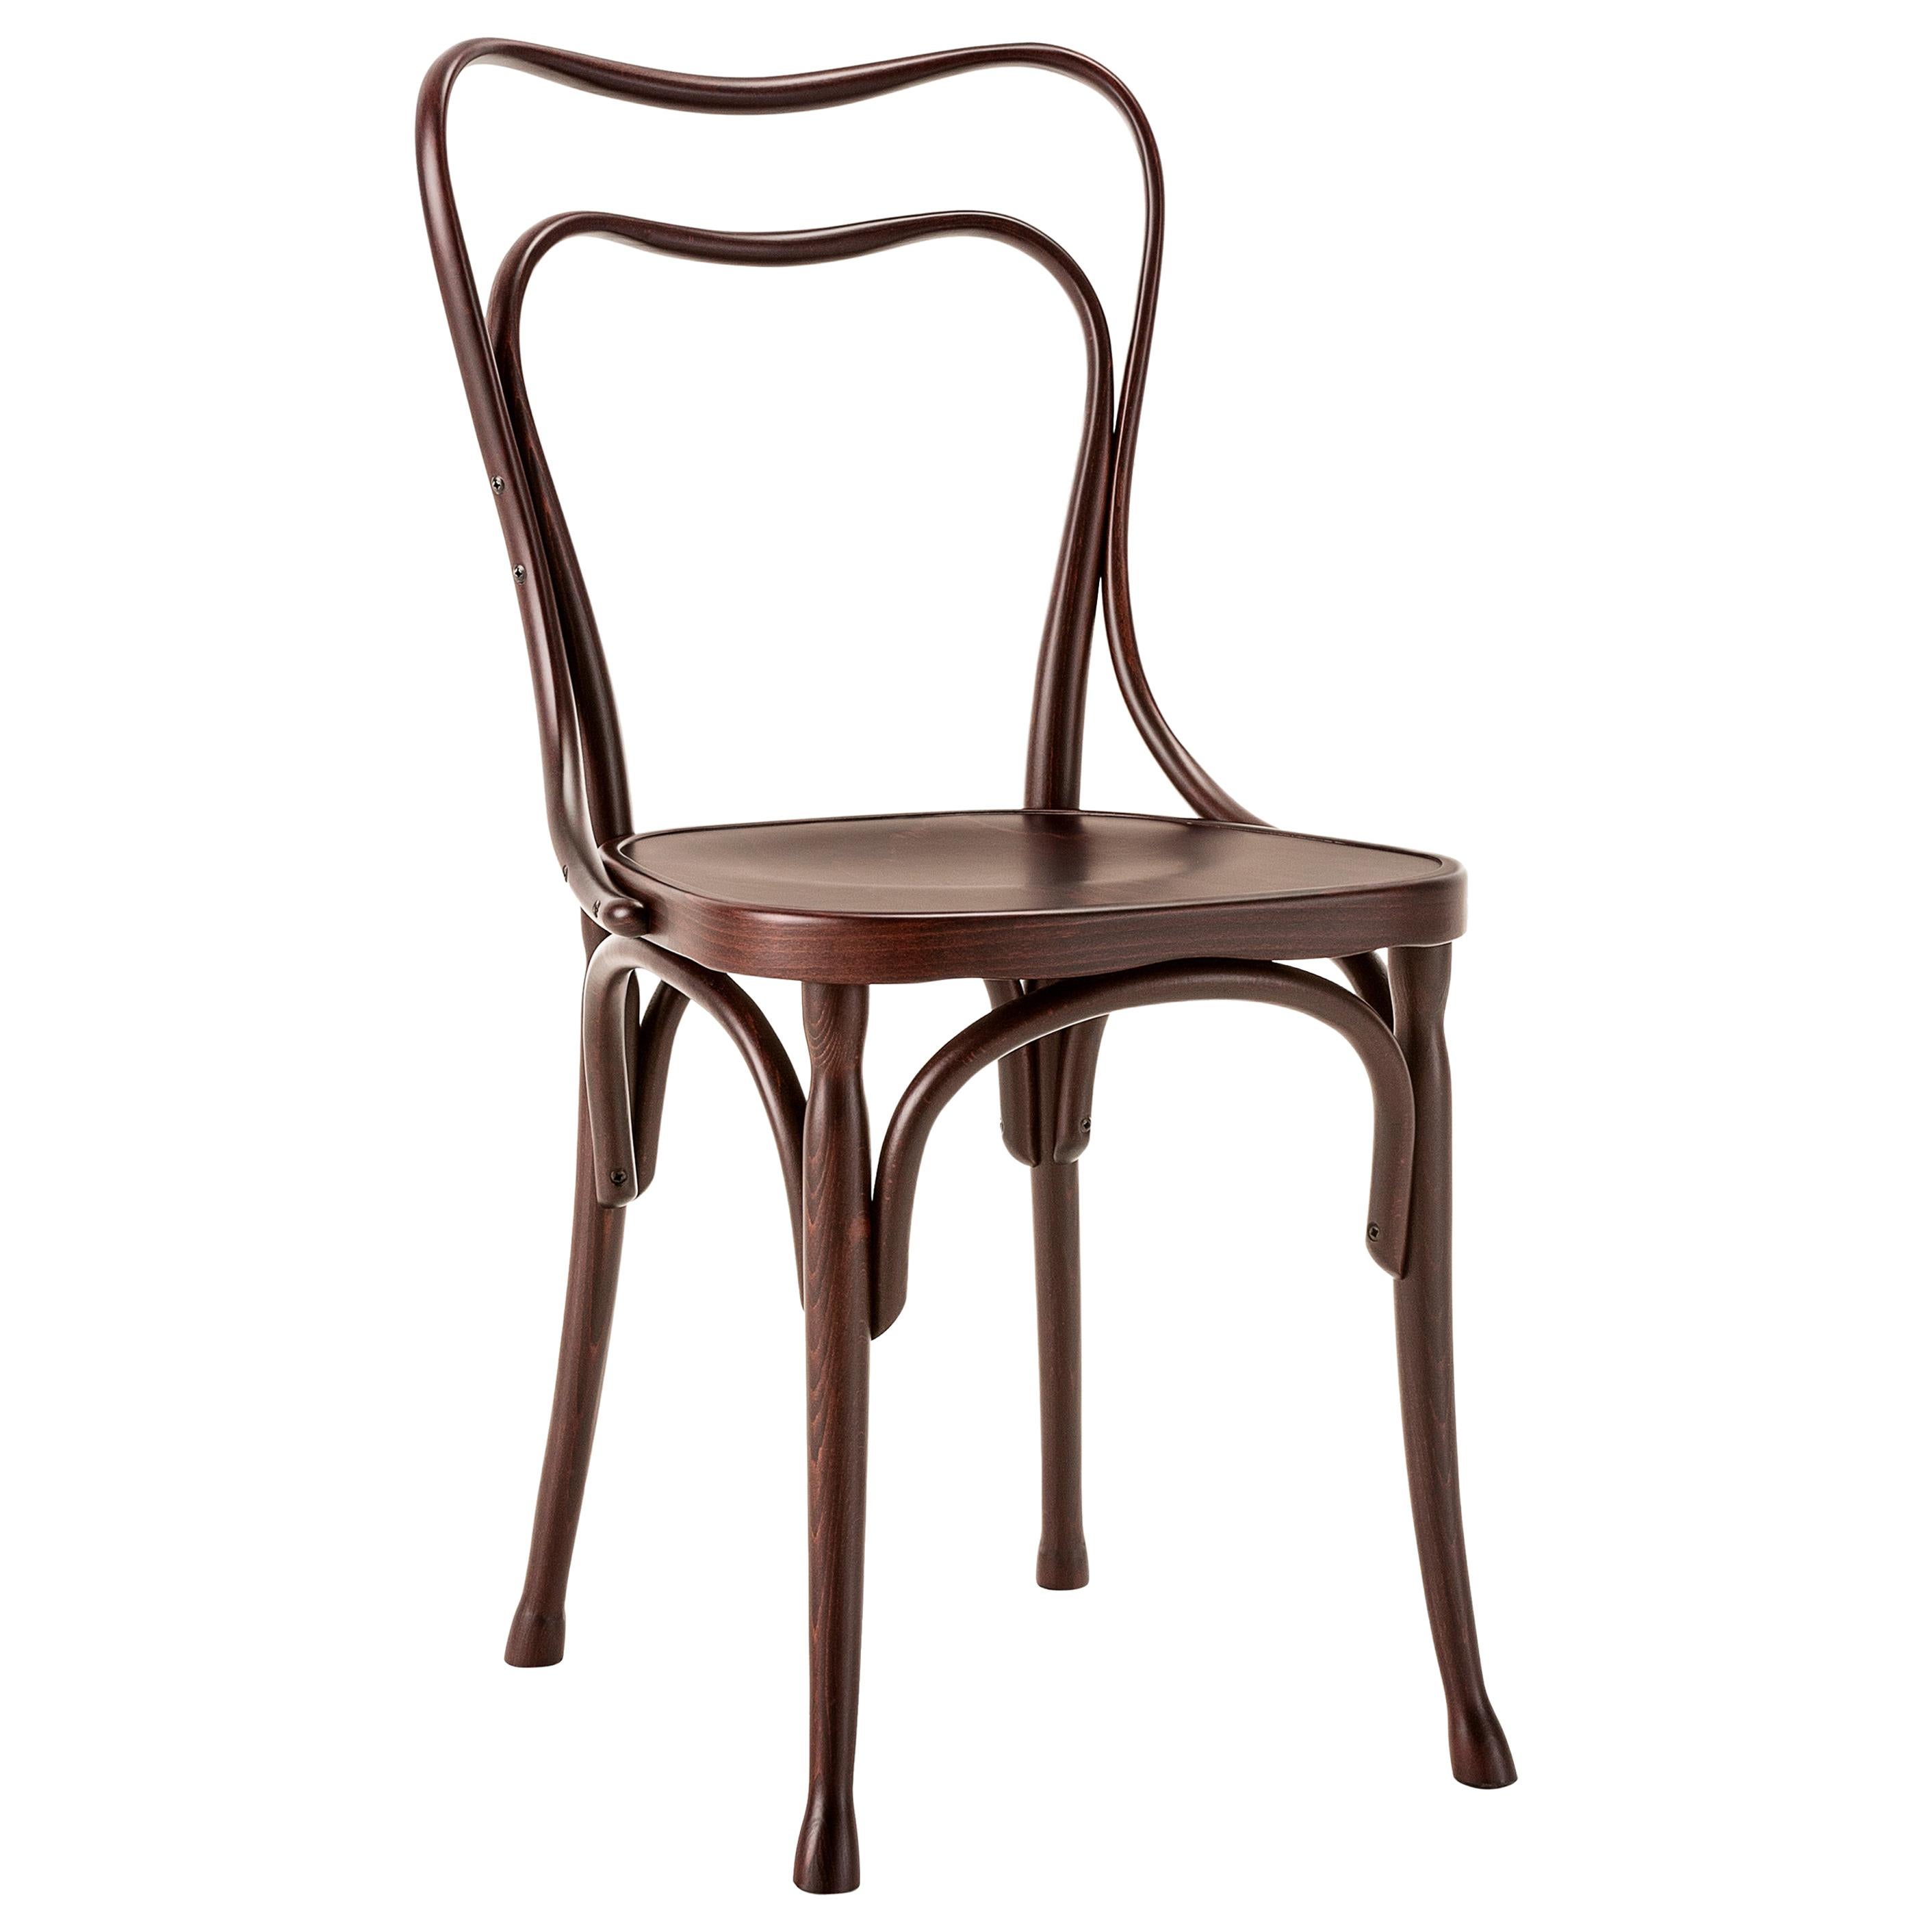 Loos Cafe Museum Chair aus dunklem Walnussholz, Thonet Vienna GmbH